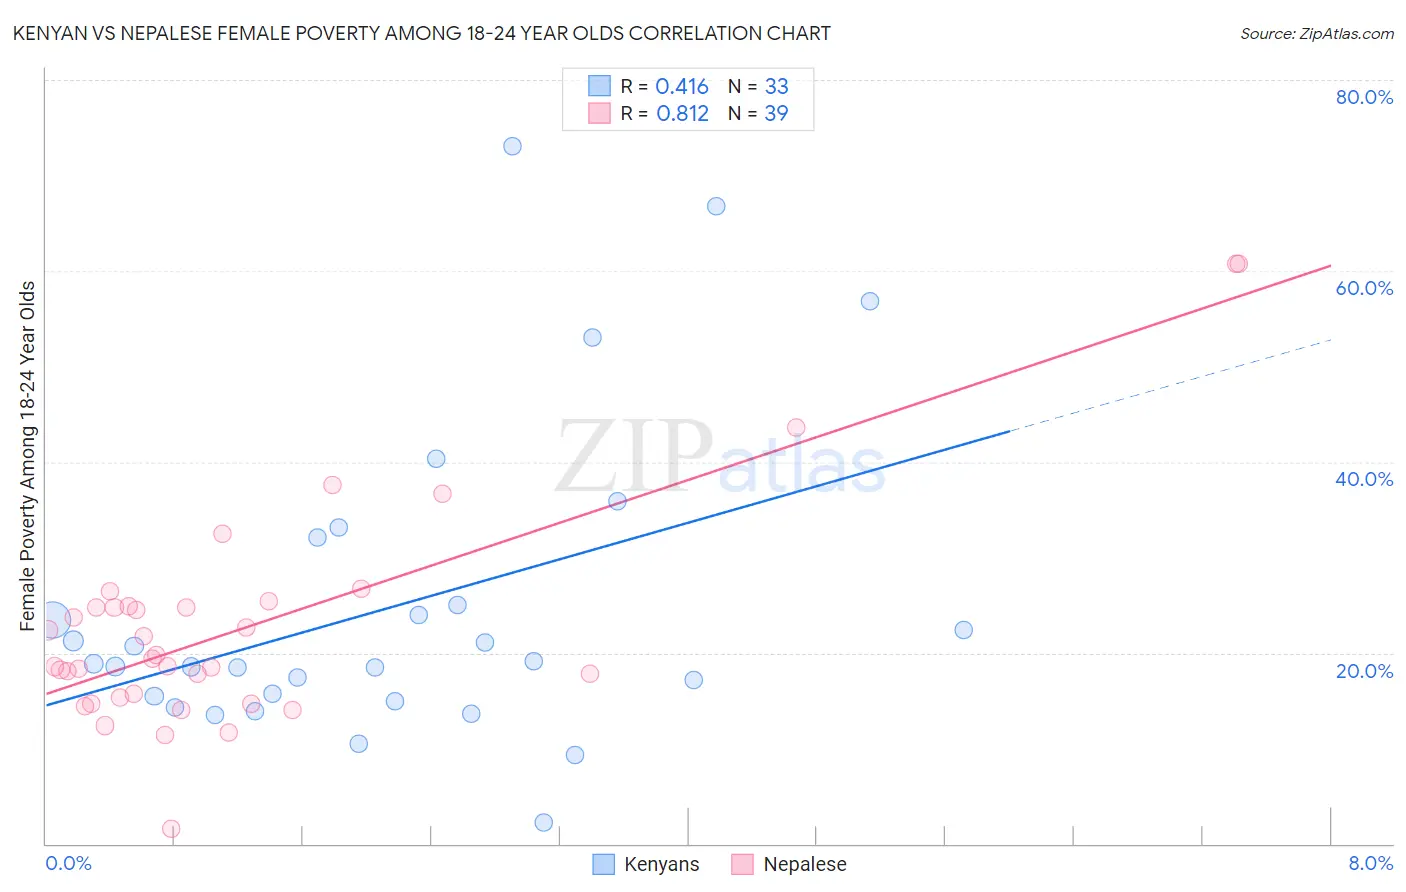 Kenyan vs Nepalese Female Poverty Among 18-24 Year Olds